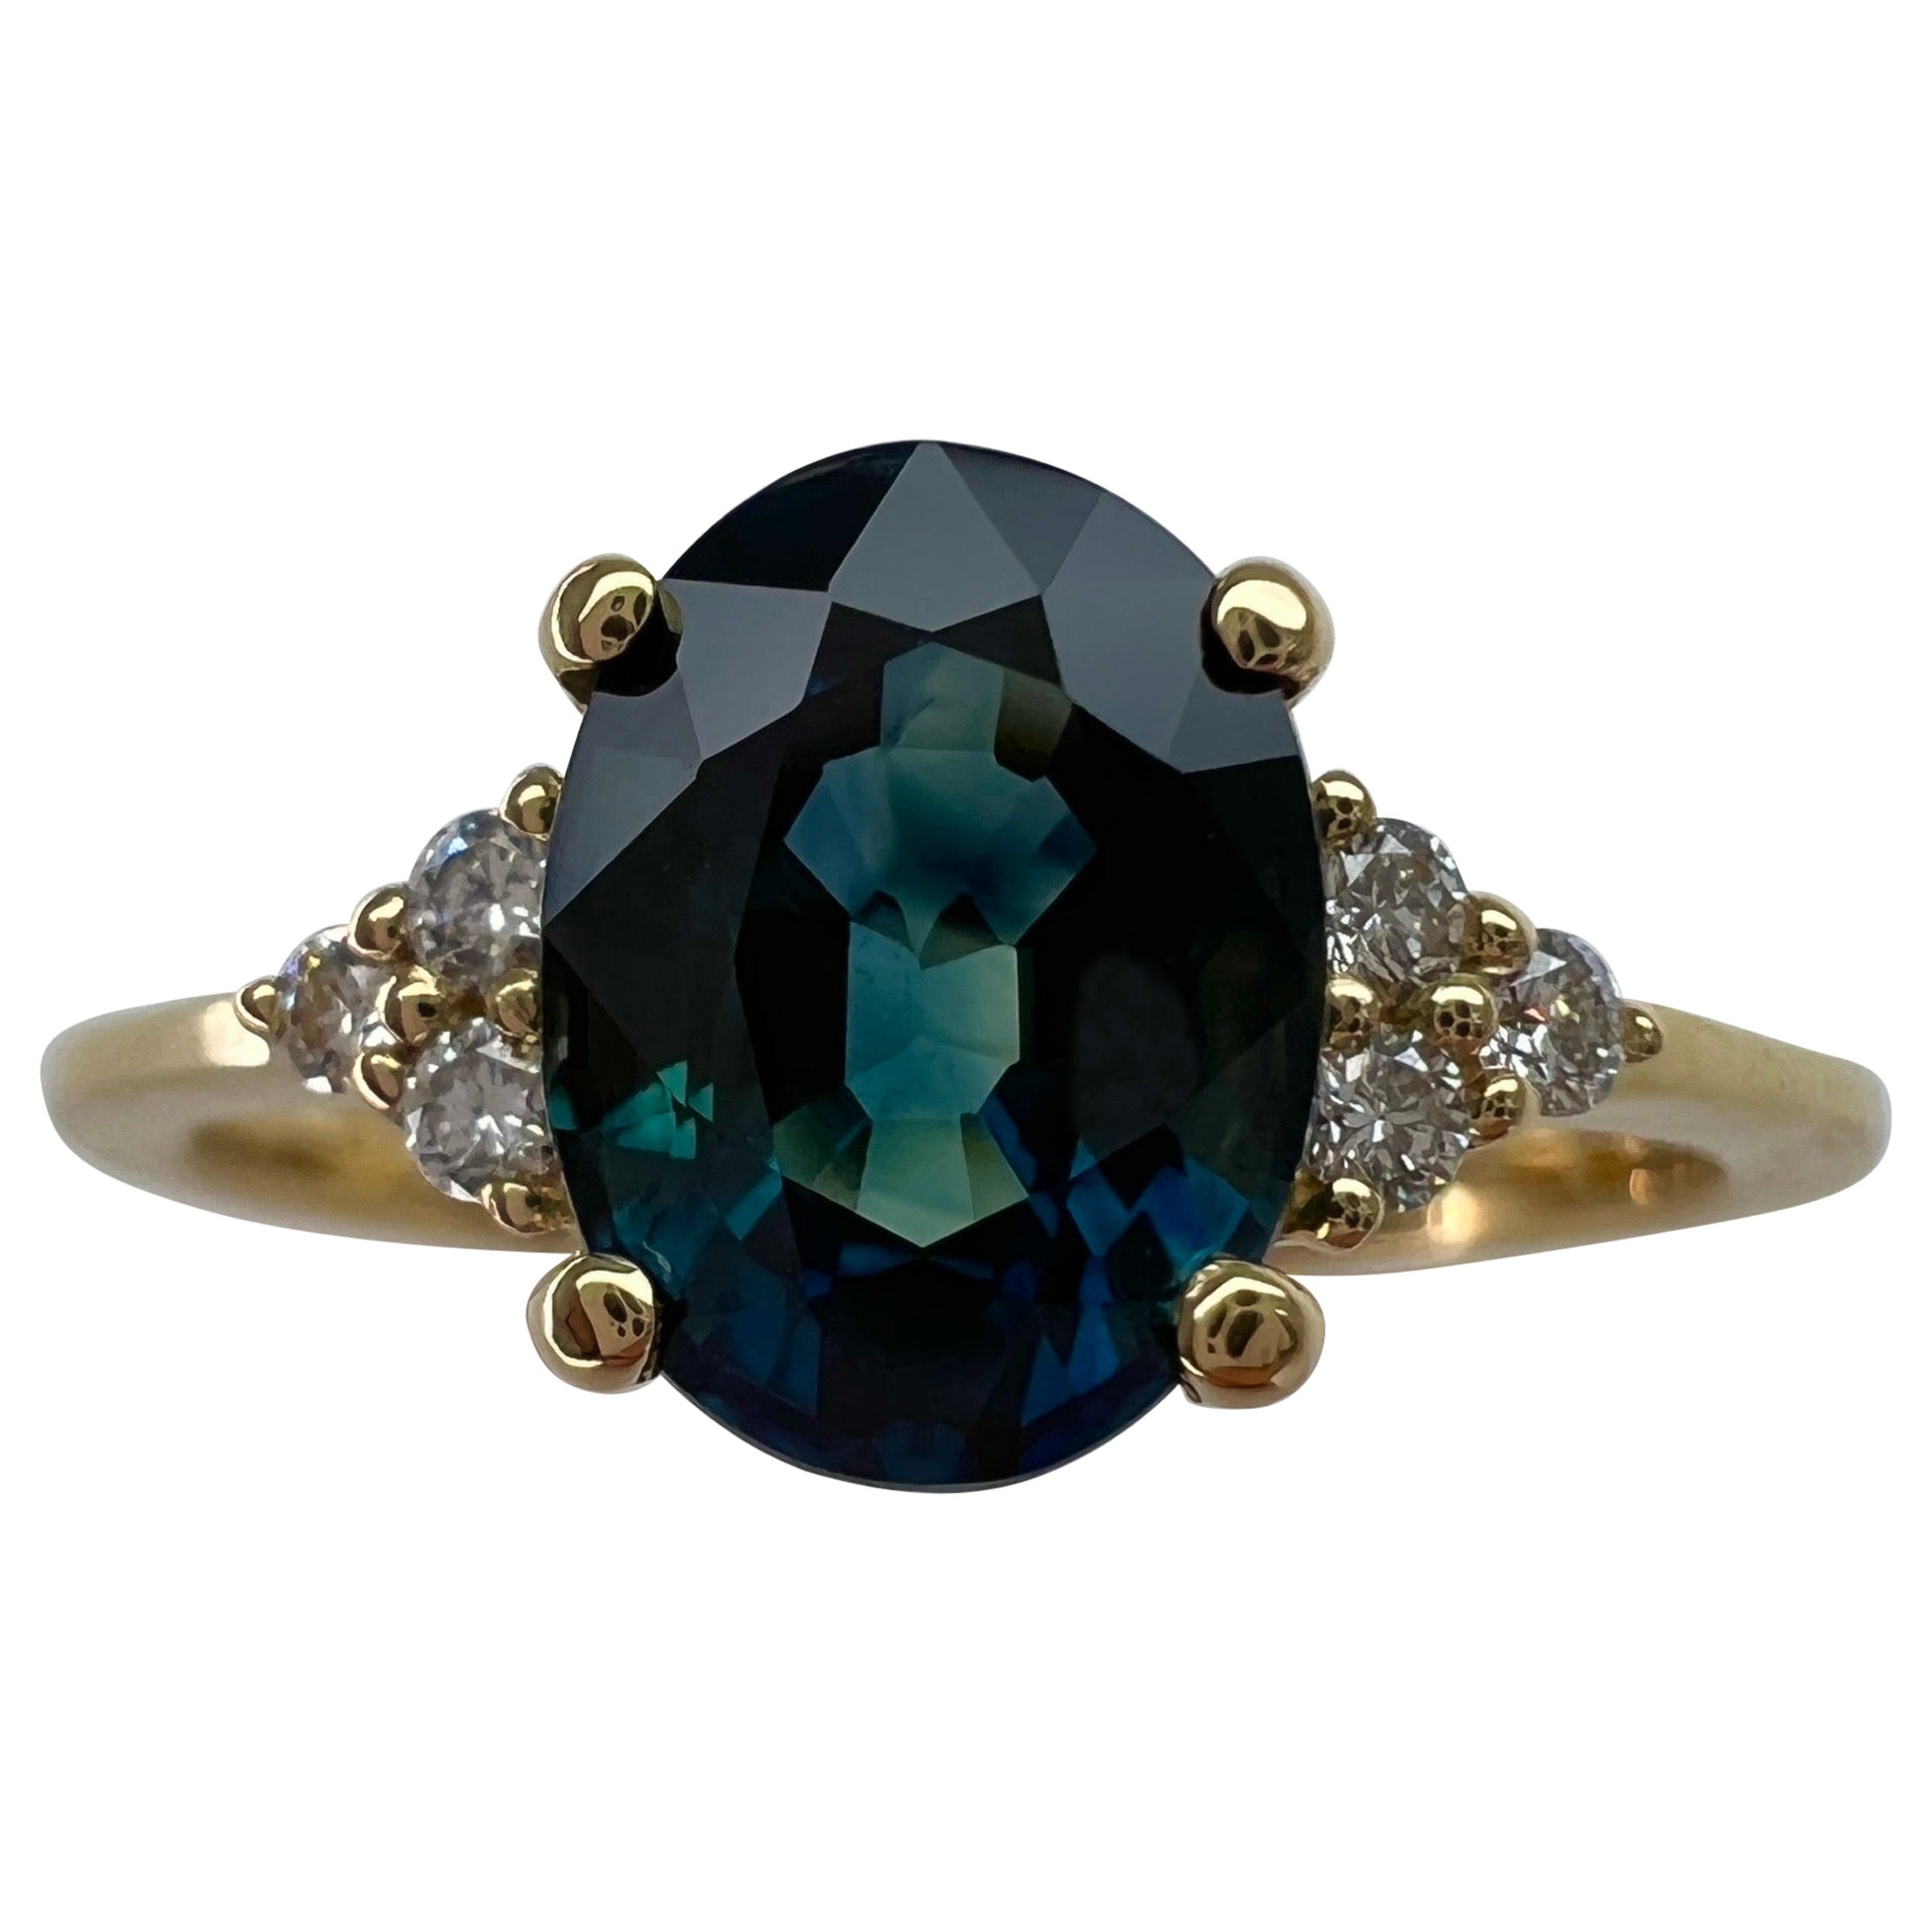 1.71 Carat Deep Teal Blue Oval Cut Sapphire & Diamond 18k Yellow Gold Ring